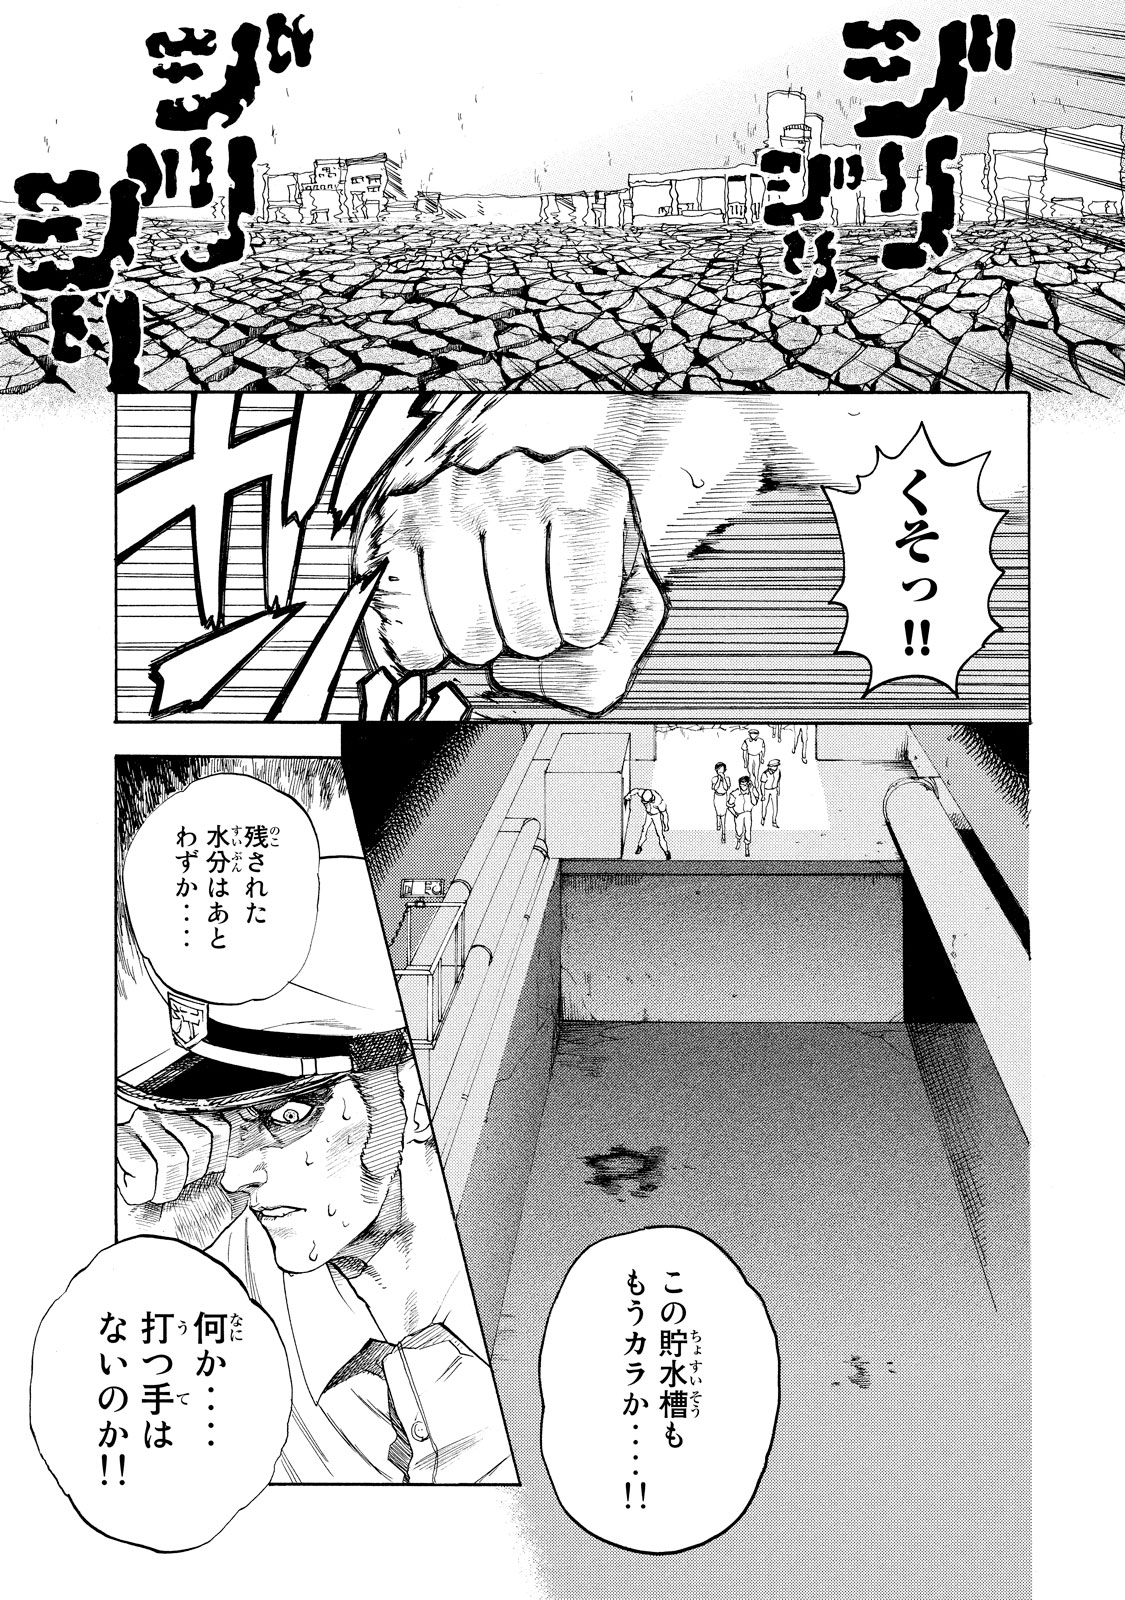 Hataraku Saibou - Chapter 6 - Page 1